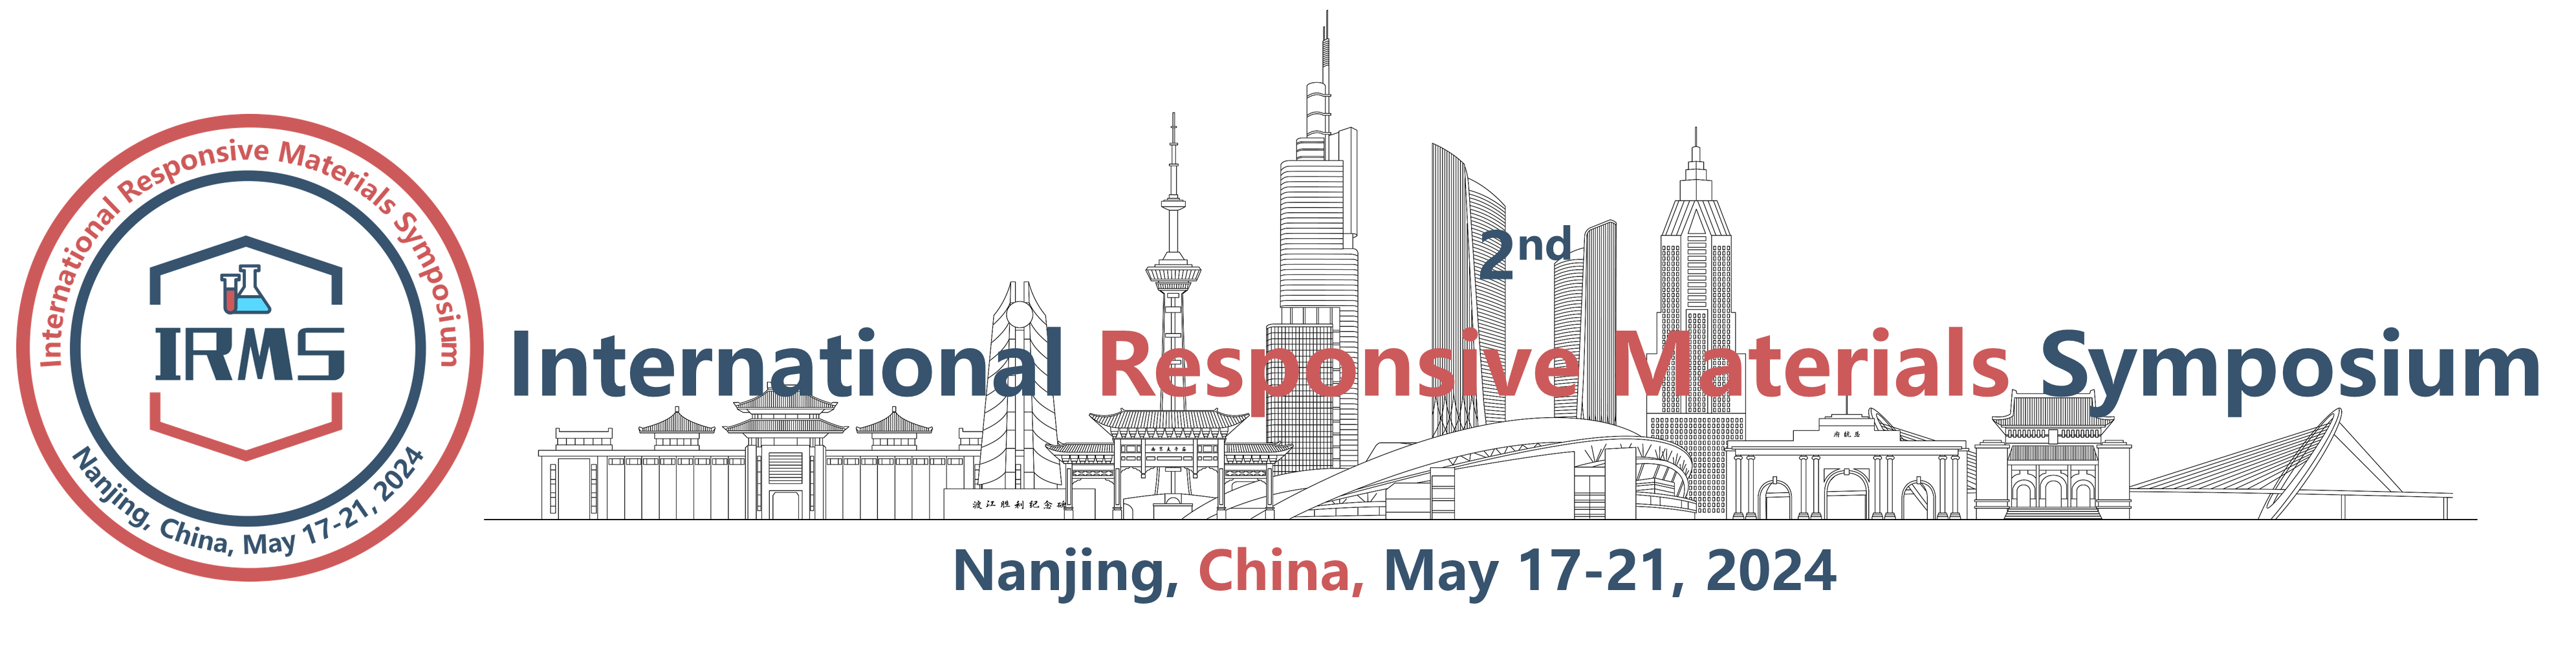 International Responsive Materials Symposium